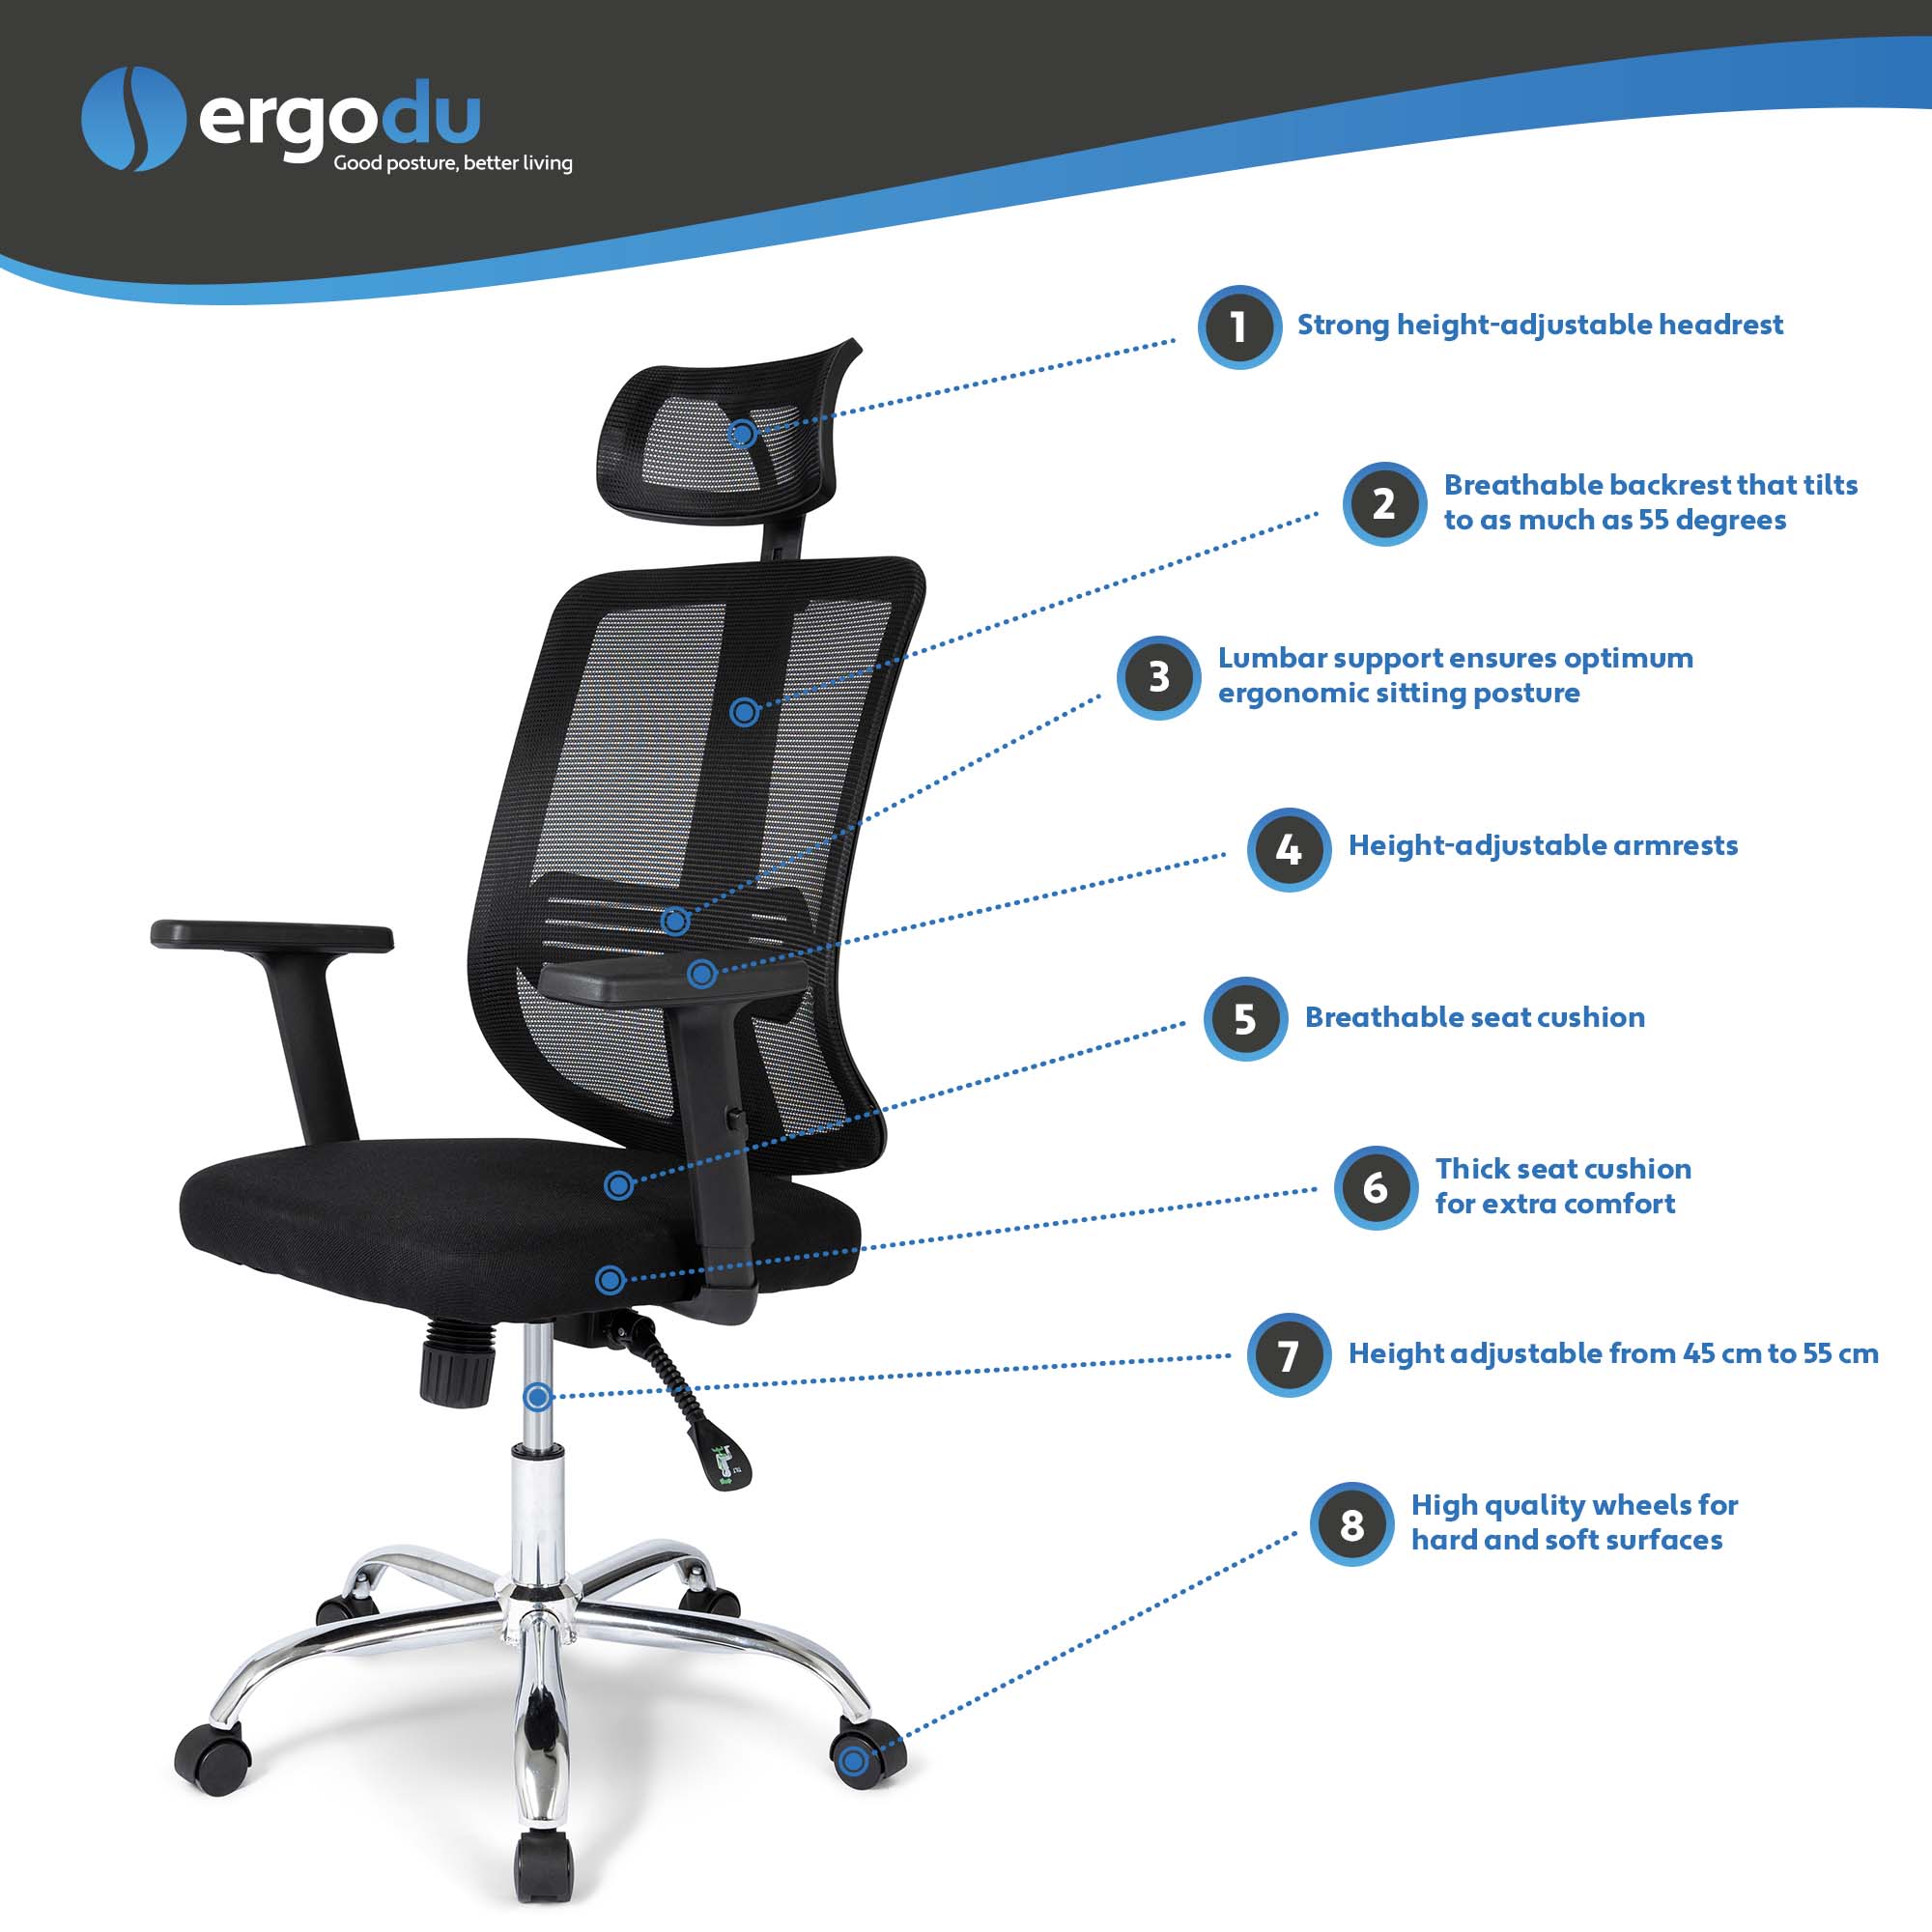 Ergodu Office Chair with Adjustable Armrests USP's